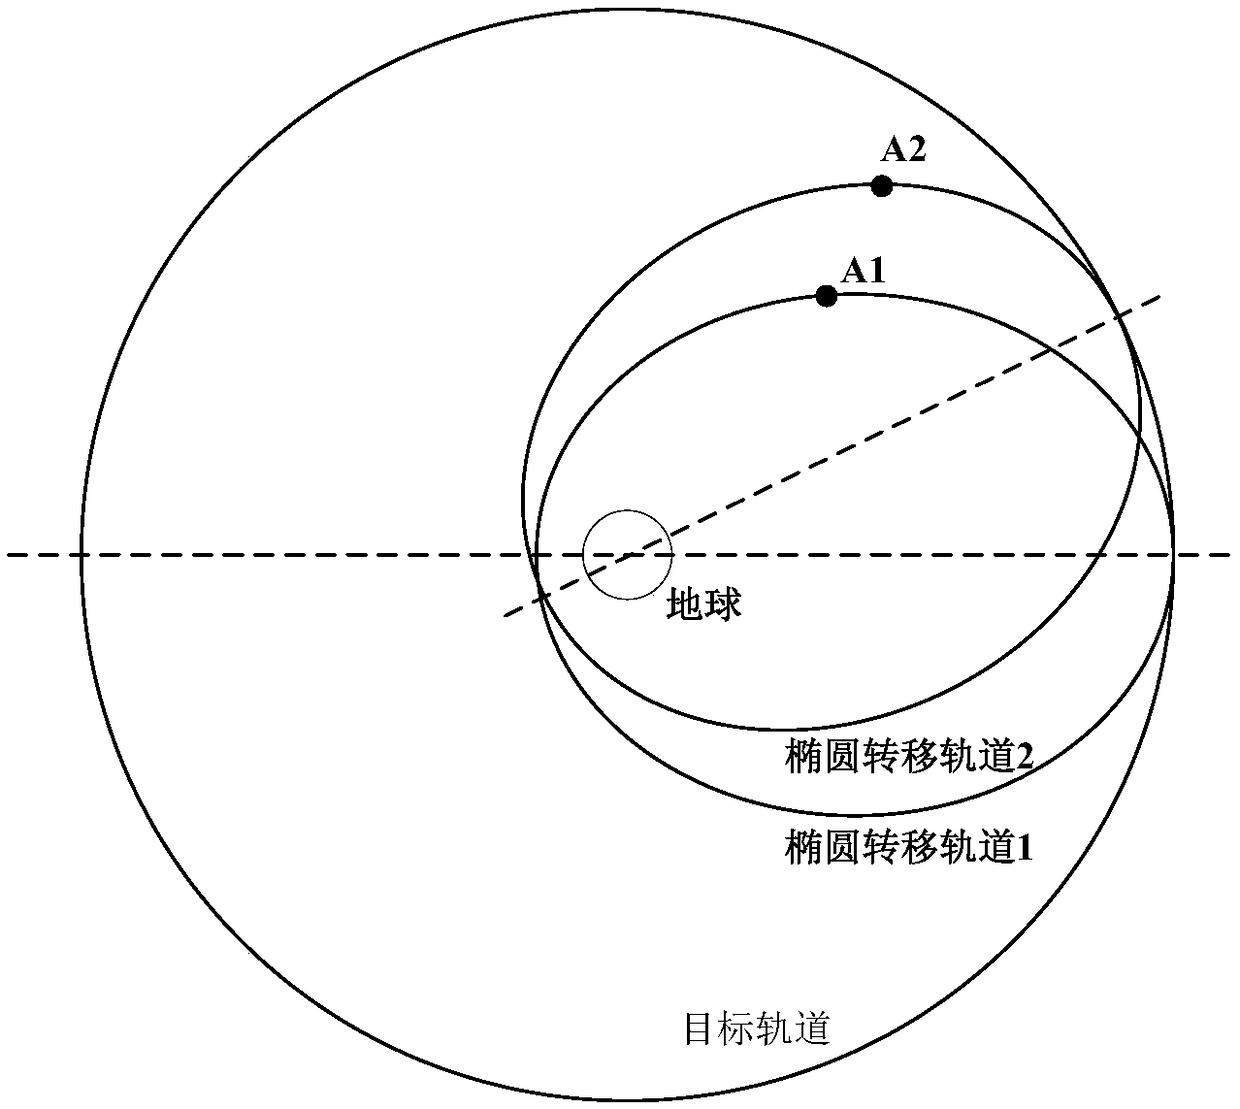 Orbit-injection-type trajectory design method of solid rocket based on elliptical transfer orbit